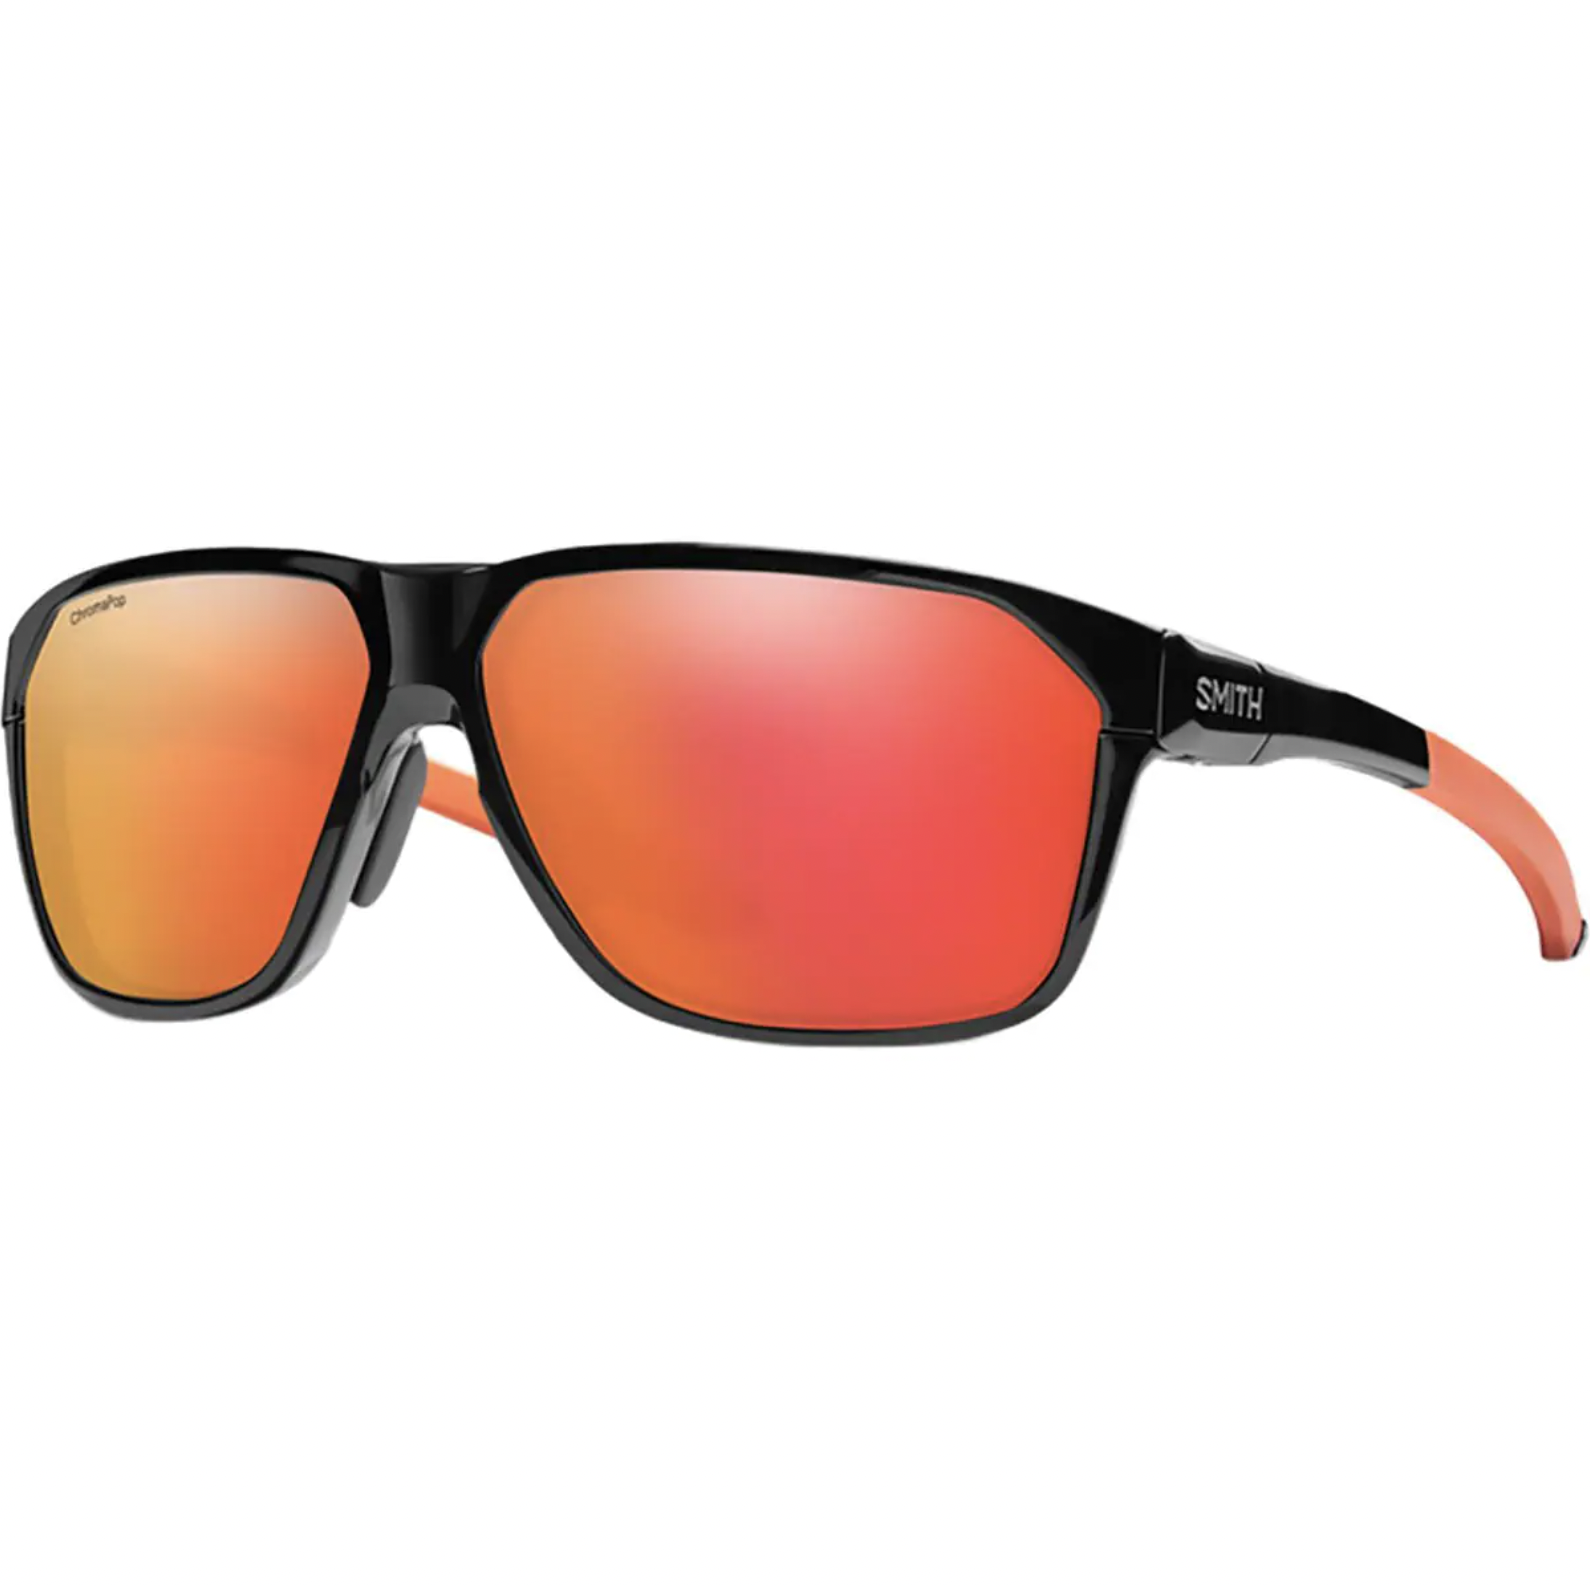 Fartlek EASSUN Running Sunglasses, Photochromic, Adjustable and Lightweight